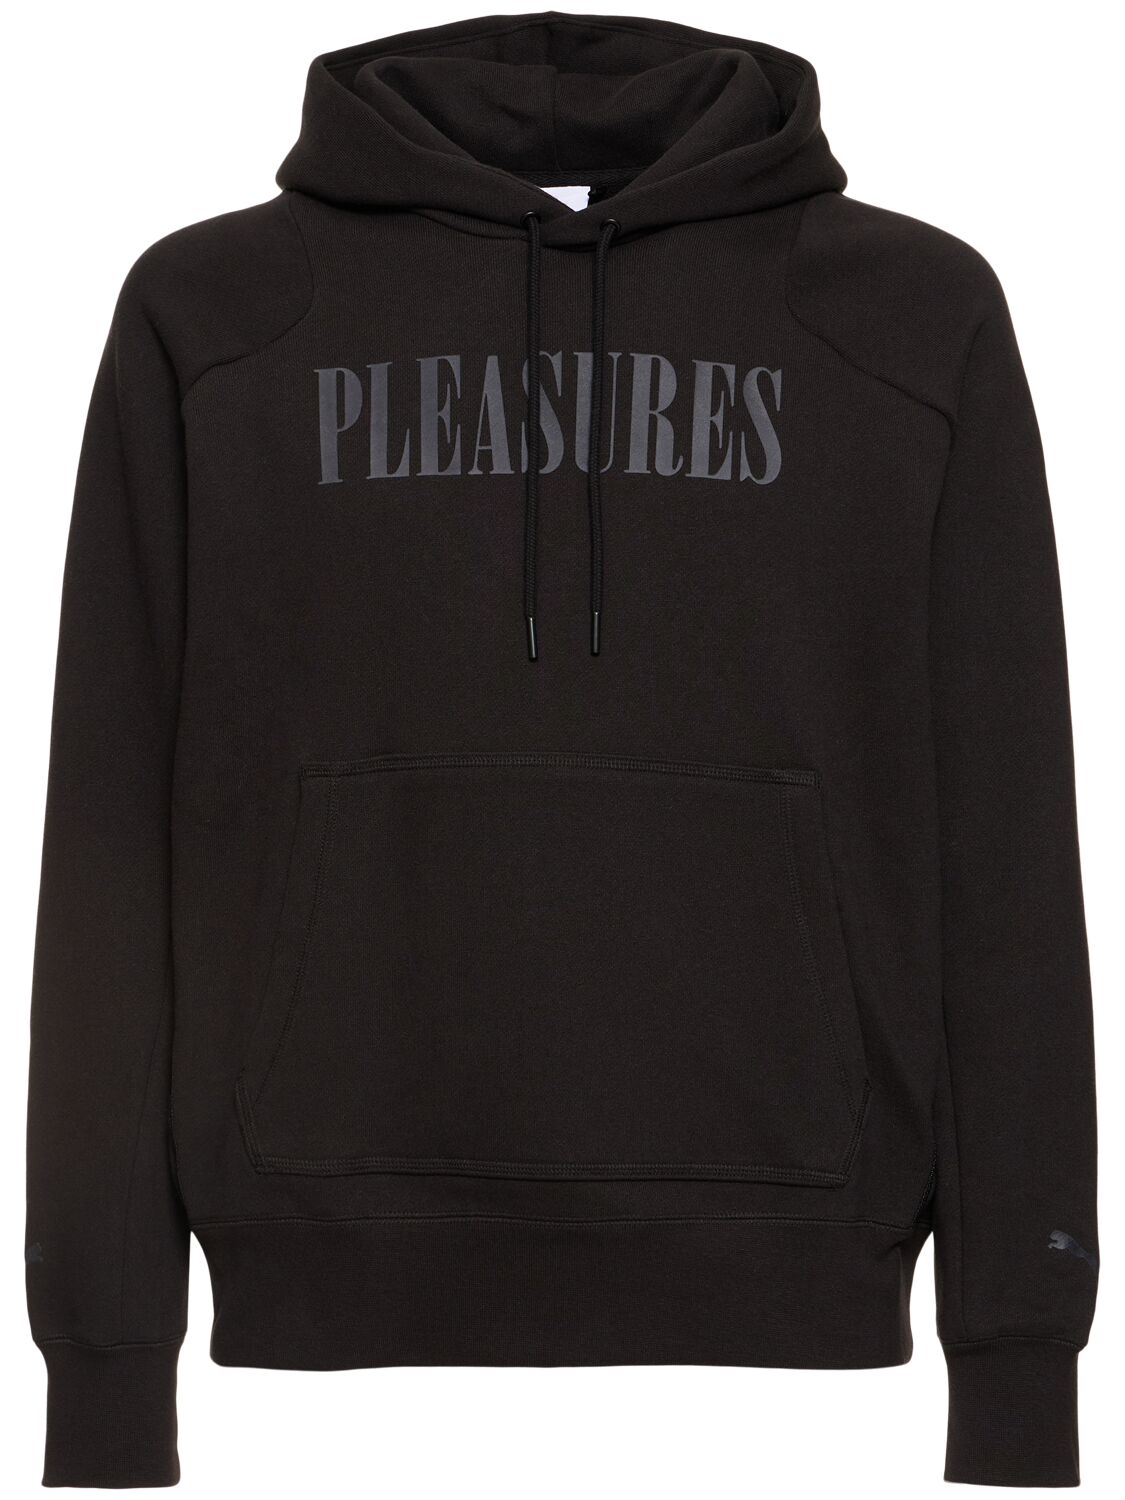 Pleasures Logo Hooded Sweatshirt